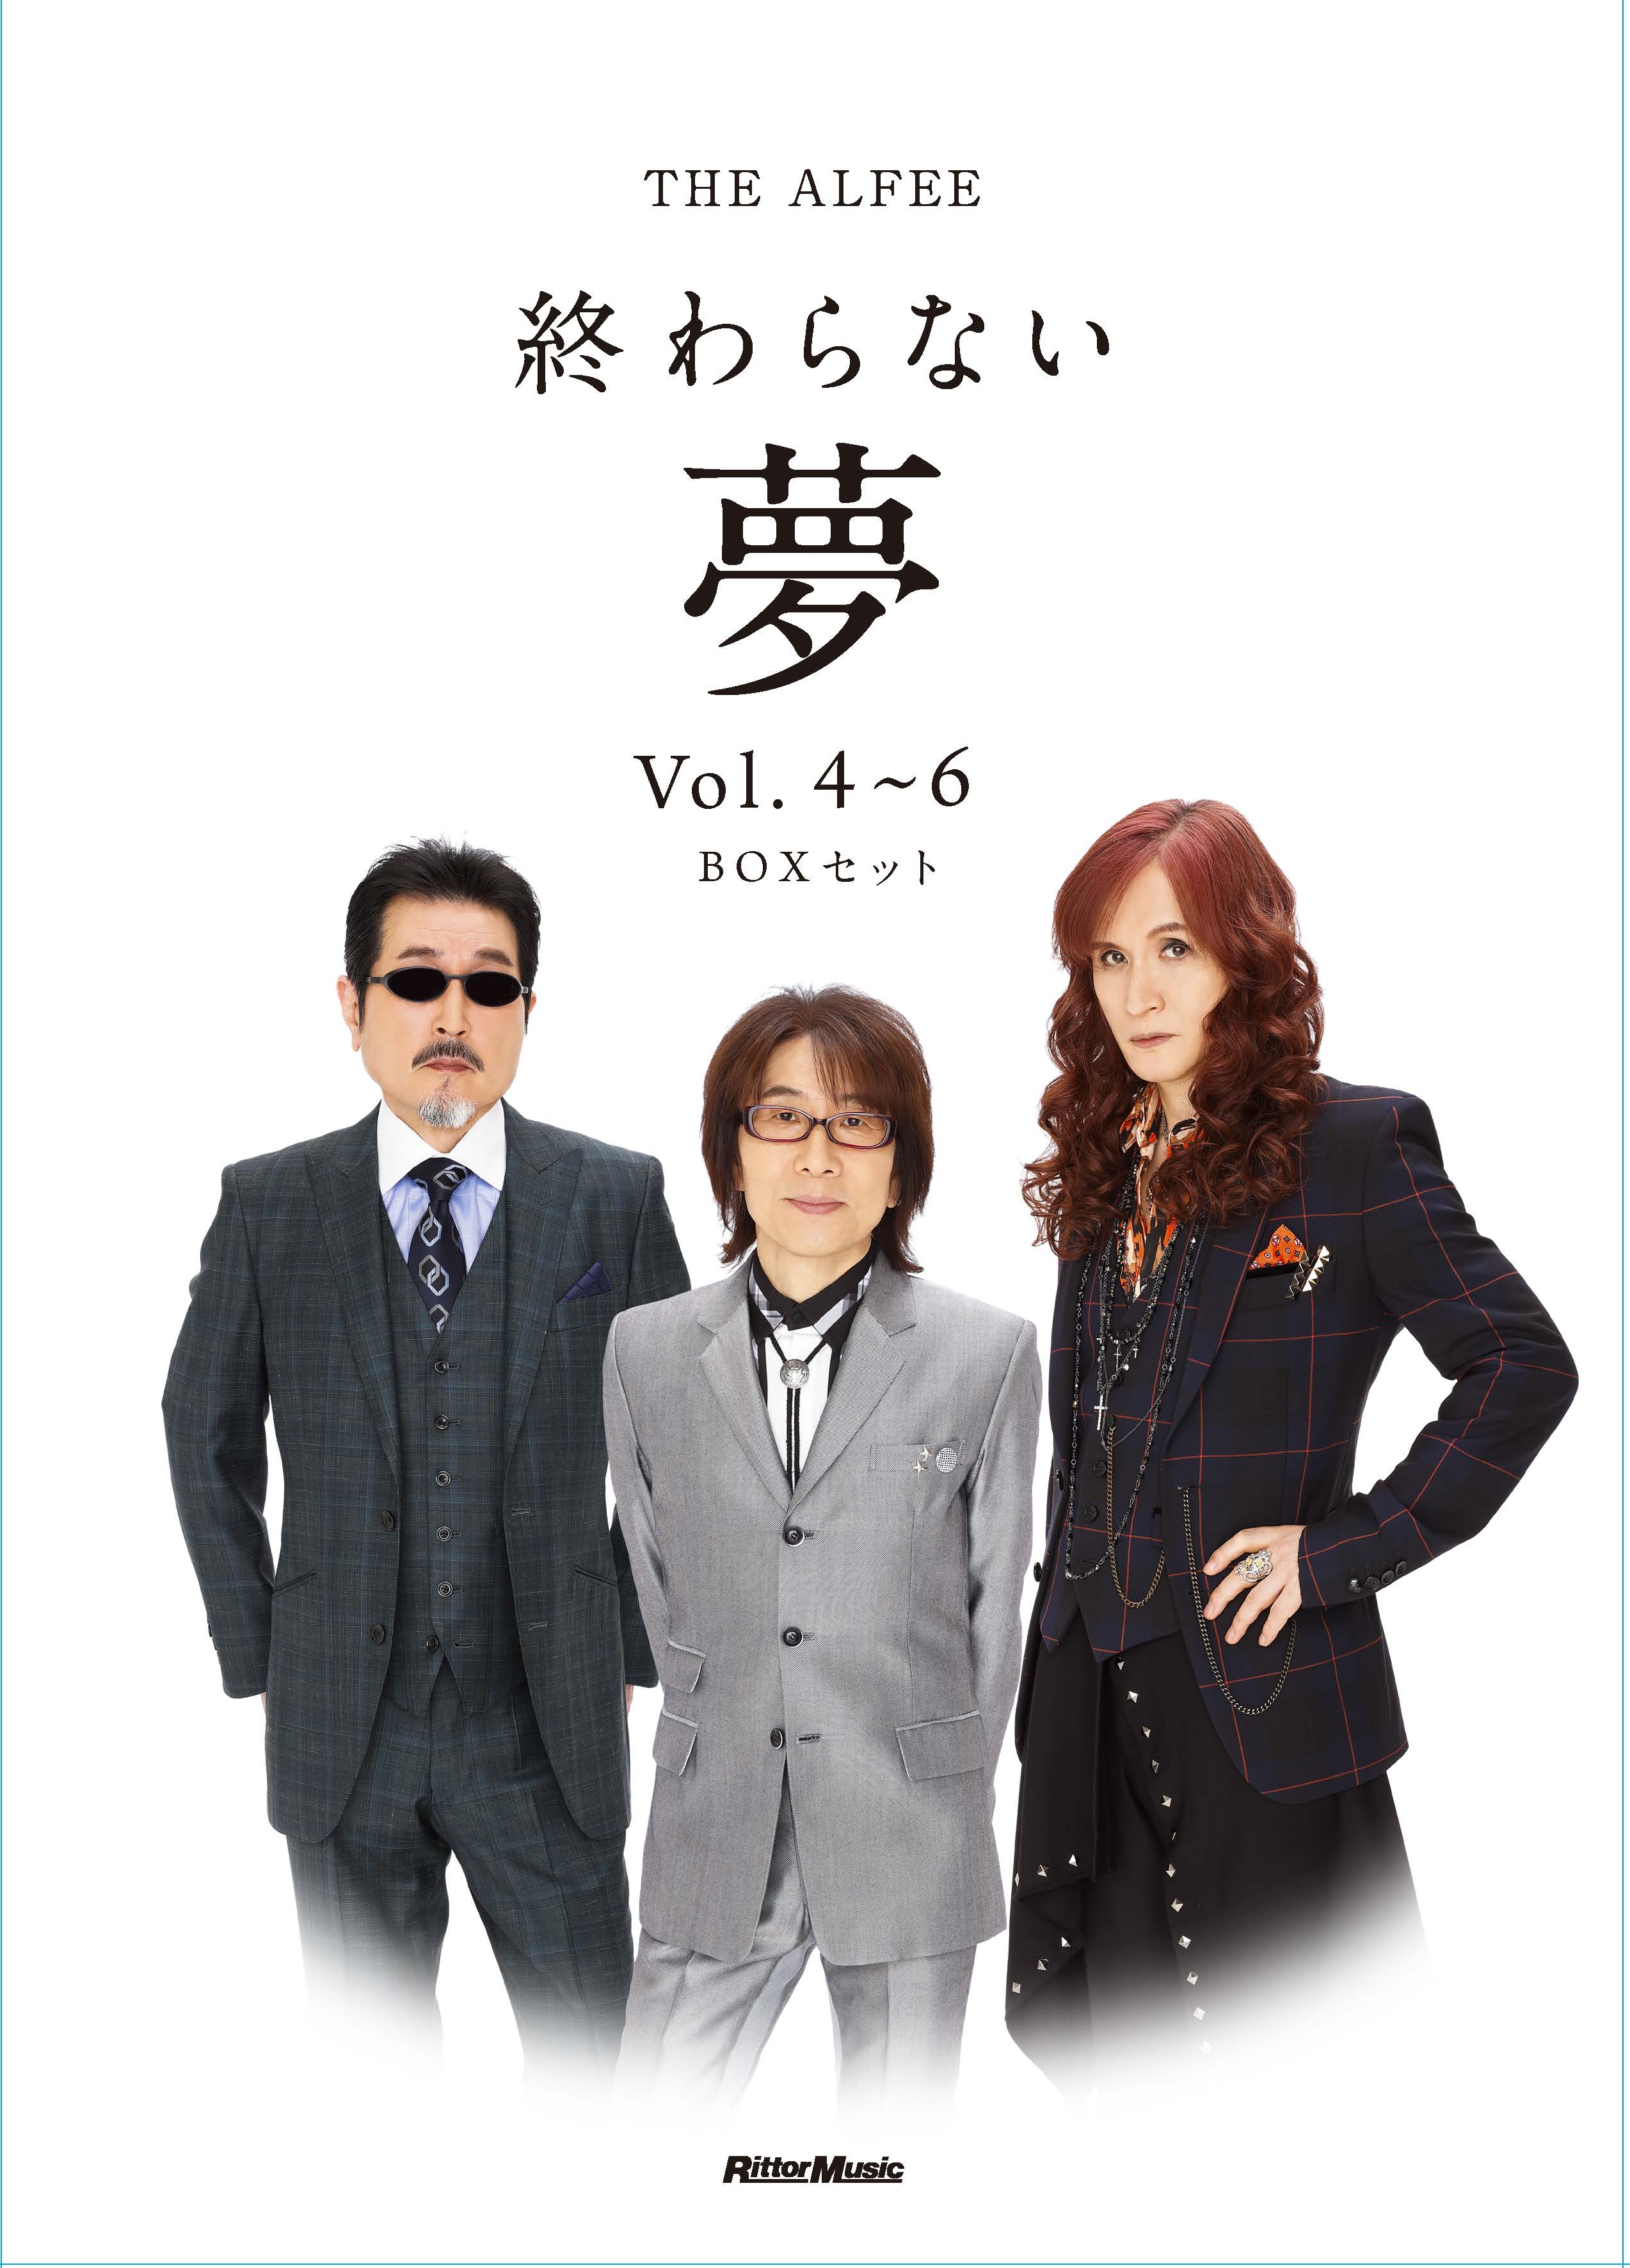 Come On ALFEE ロケ4部作 カモンアルフィー Blu-ray - DVD/ブルーレイ